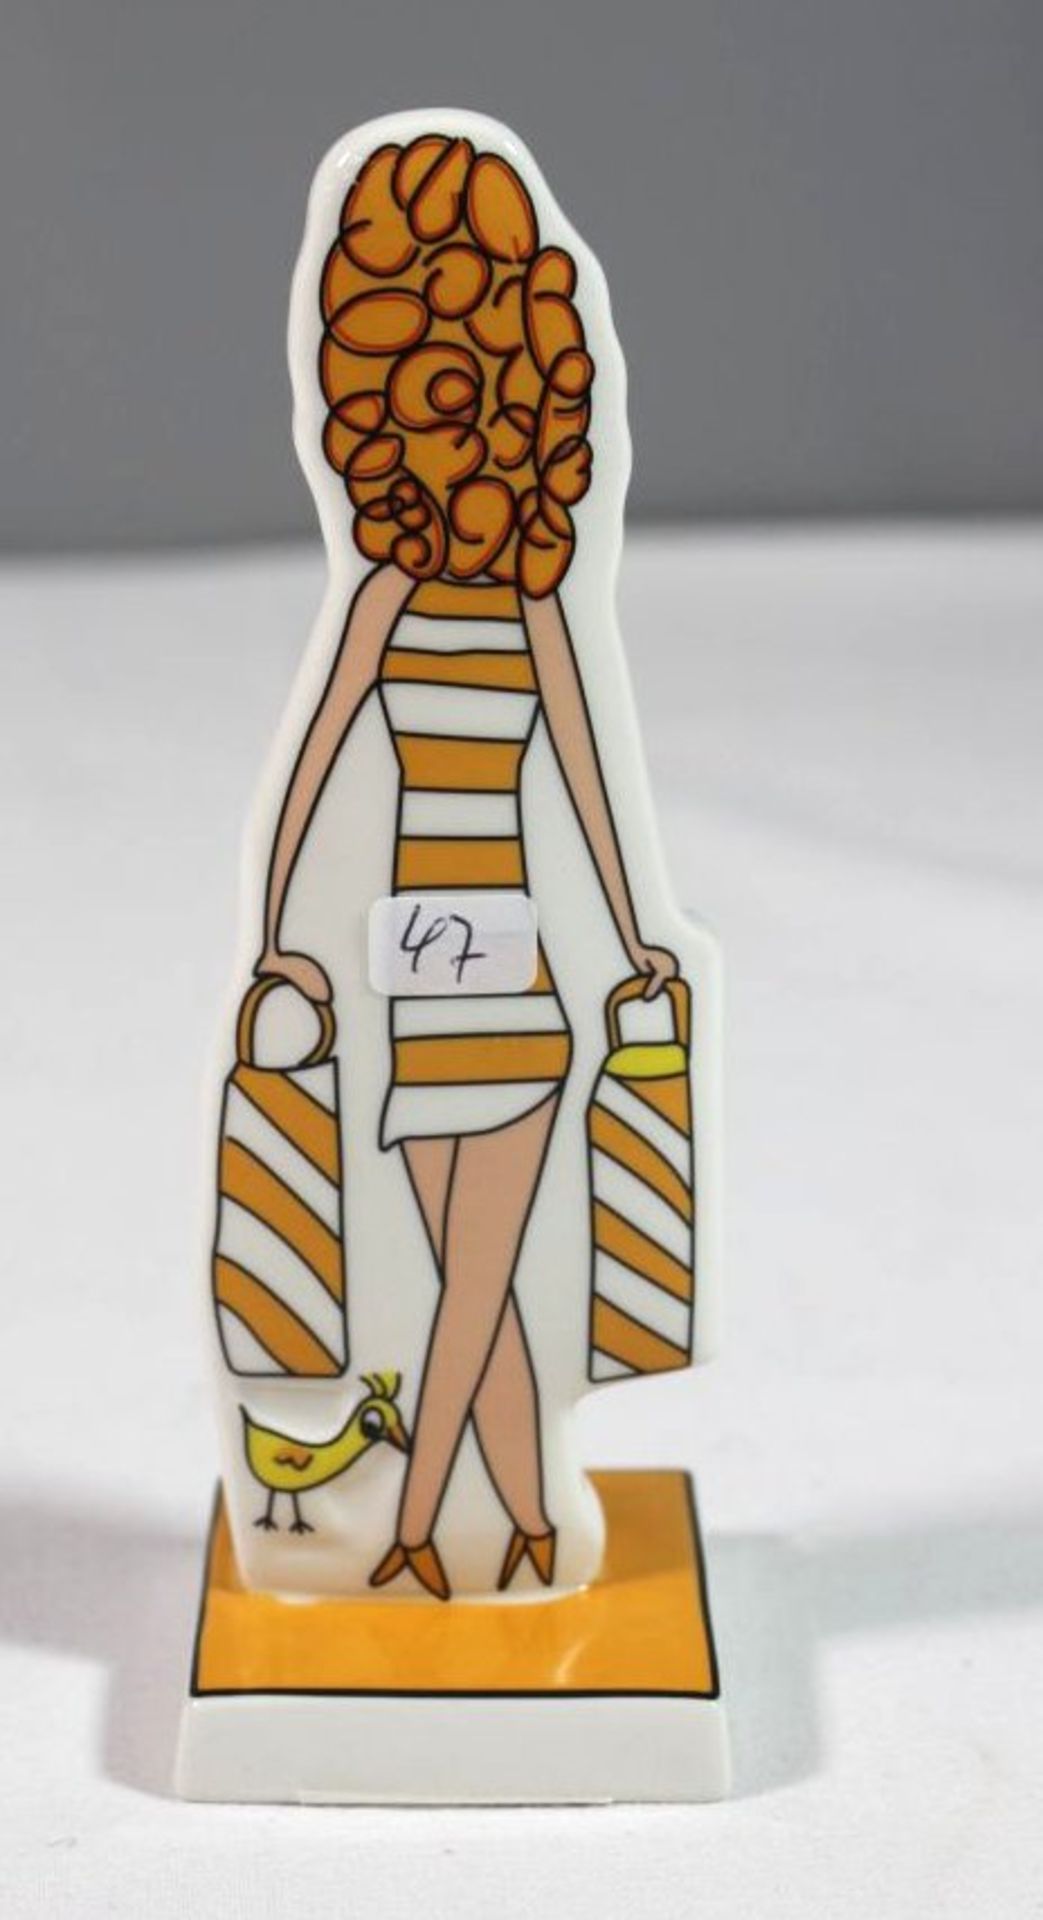 Goebel-Figur "Shopping Girl", Artis Orbis, Entw. James Rizzi, orig. Karton, H-13,5cm. - Bild 3 aus 4